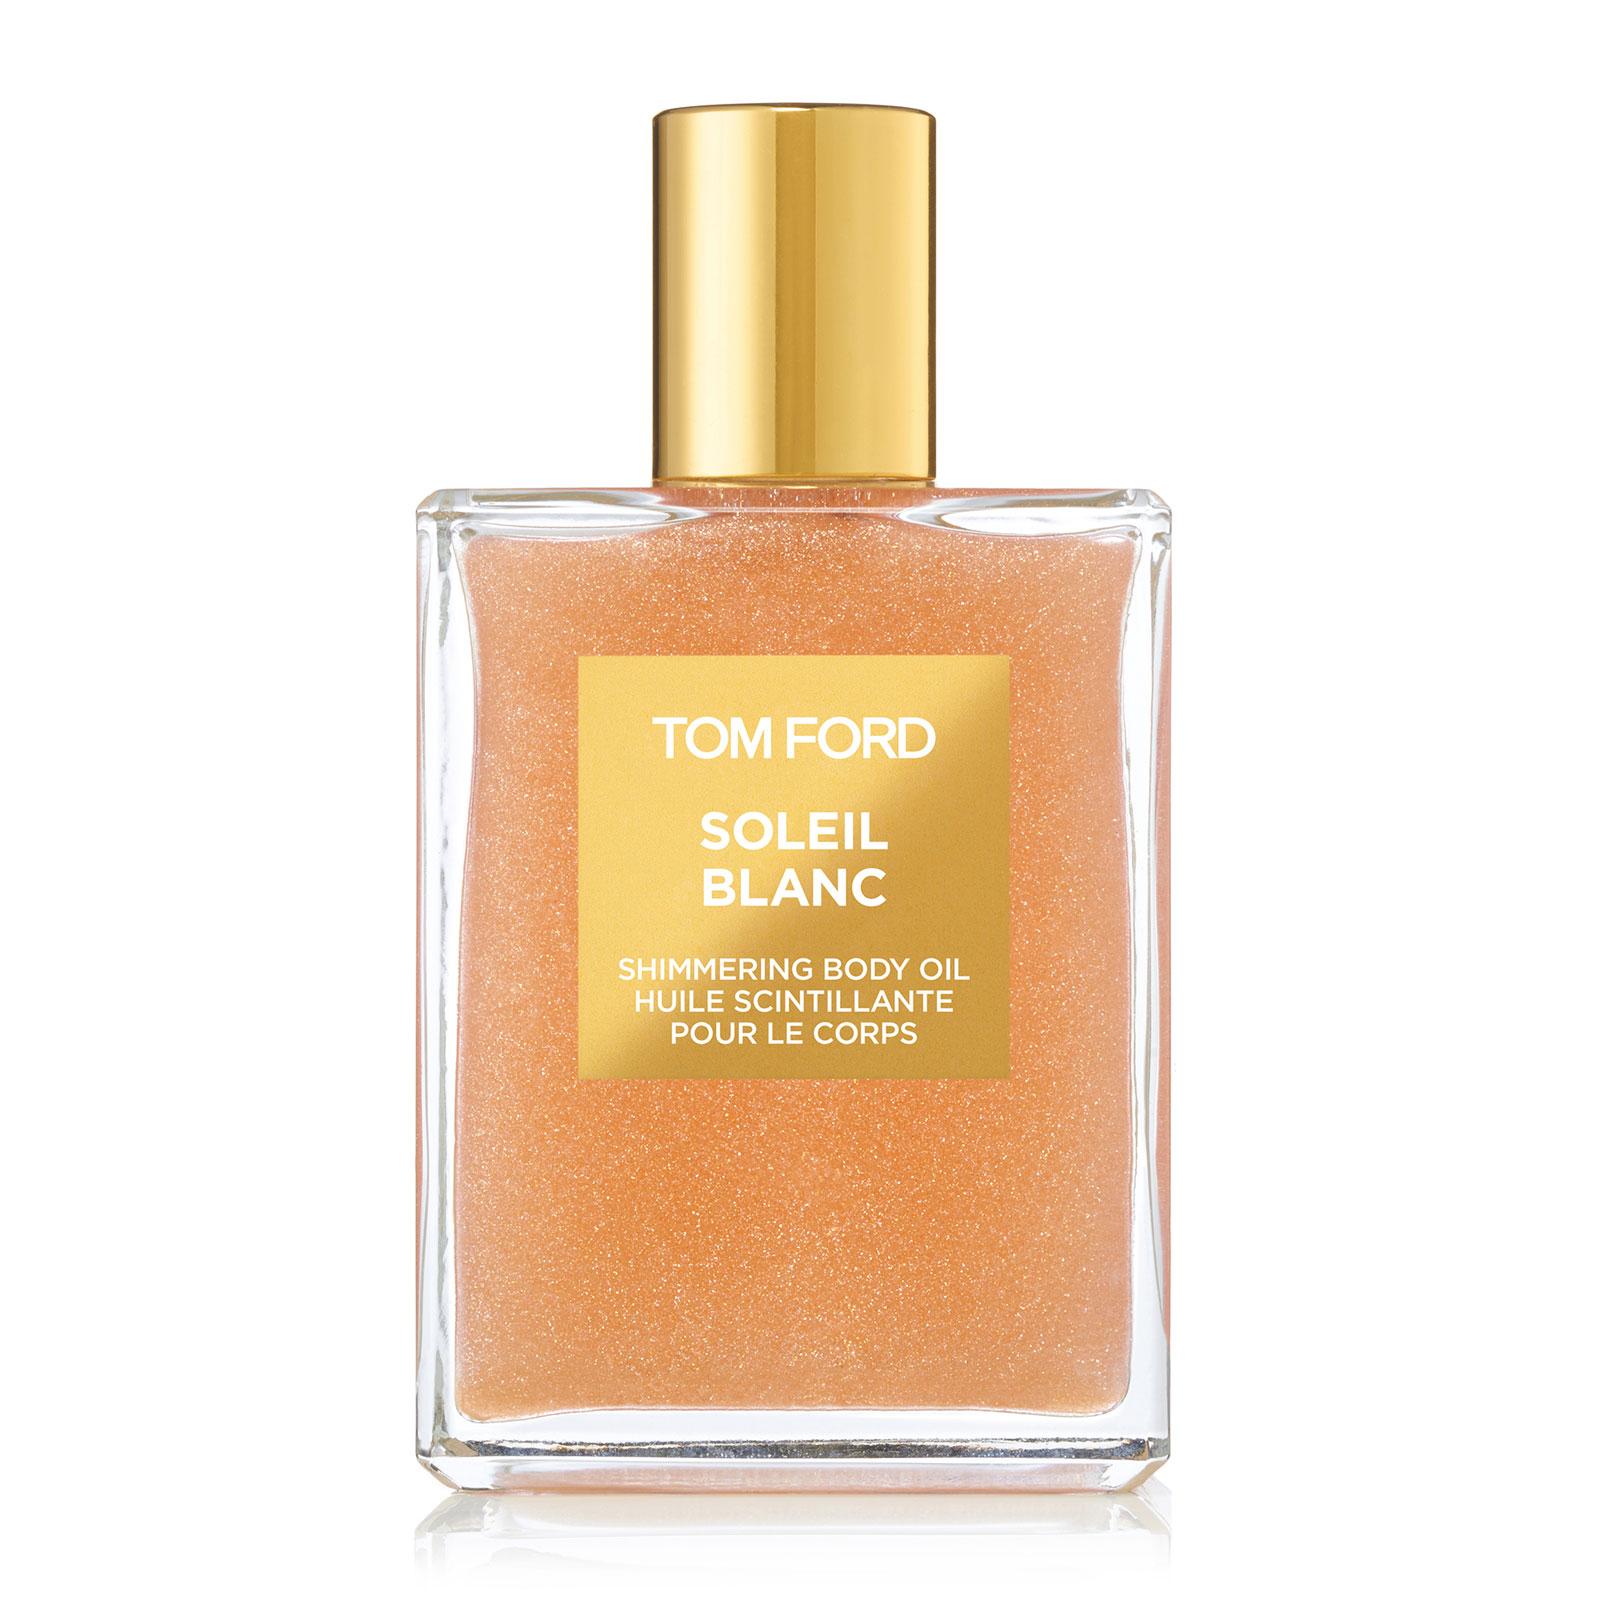 Tom Ford Soleil Blanc Shimmering Body Oil Rose Gold 100ml | FEELUNIQUE